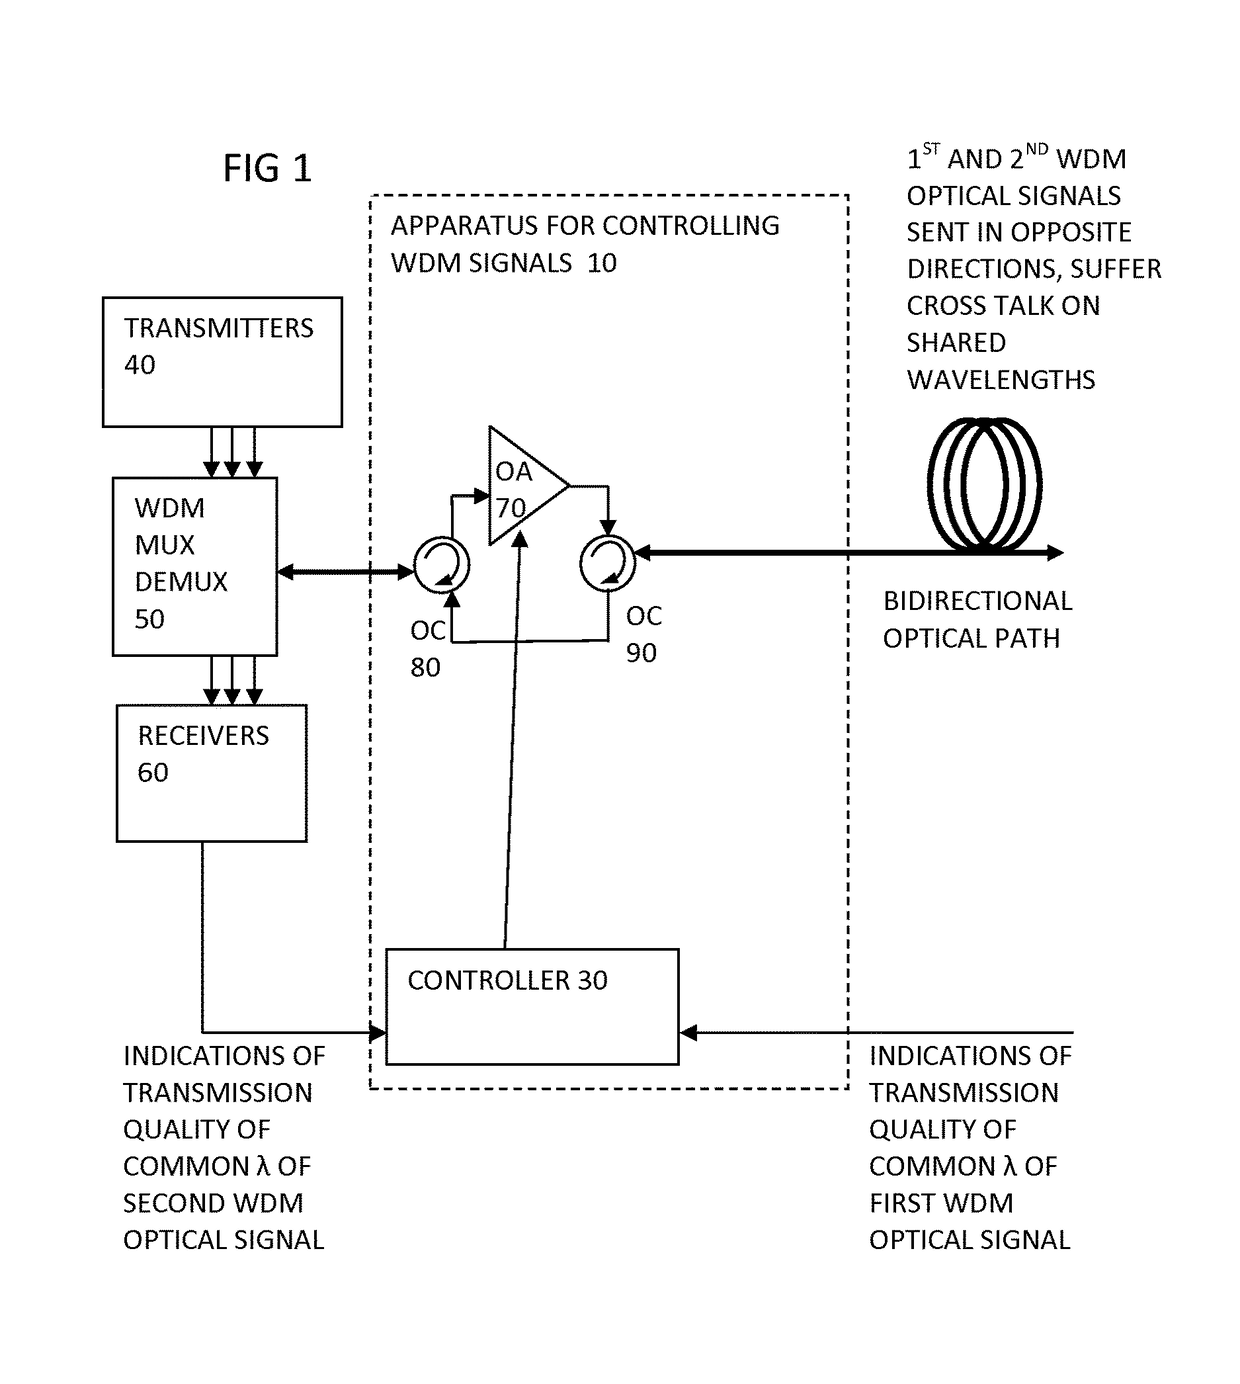 Power control in bidirectional WDM optical link